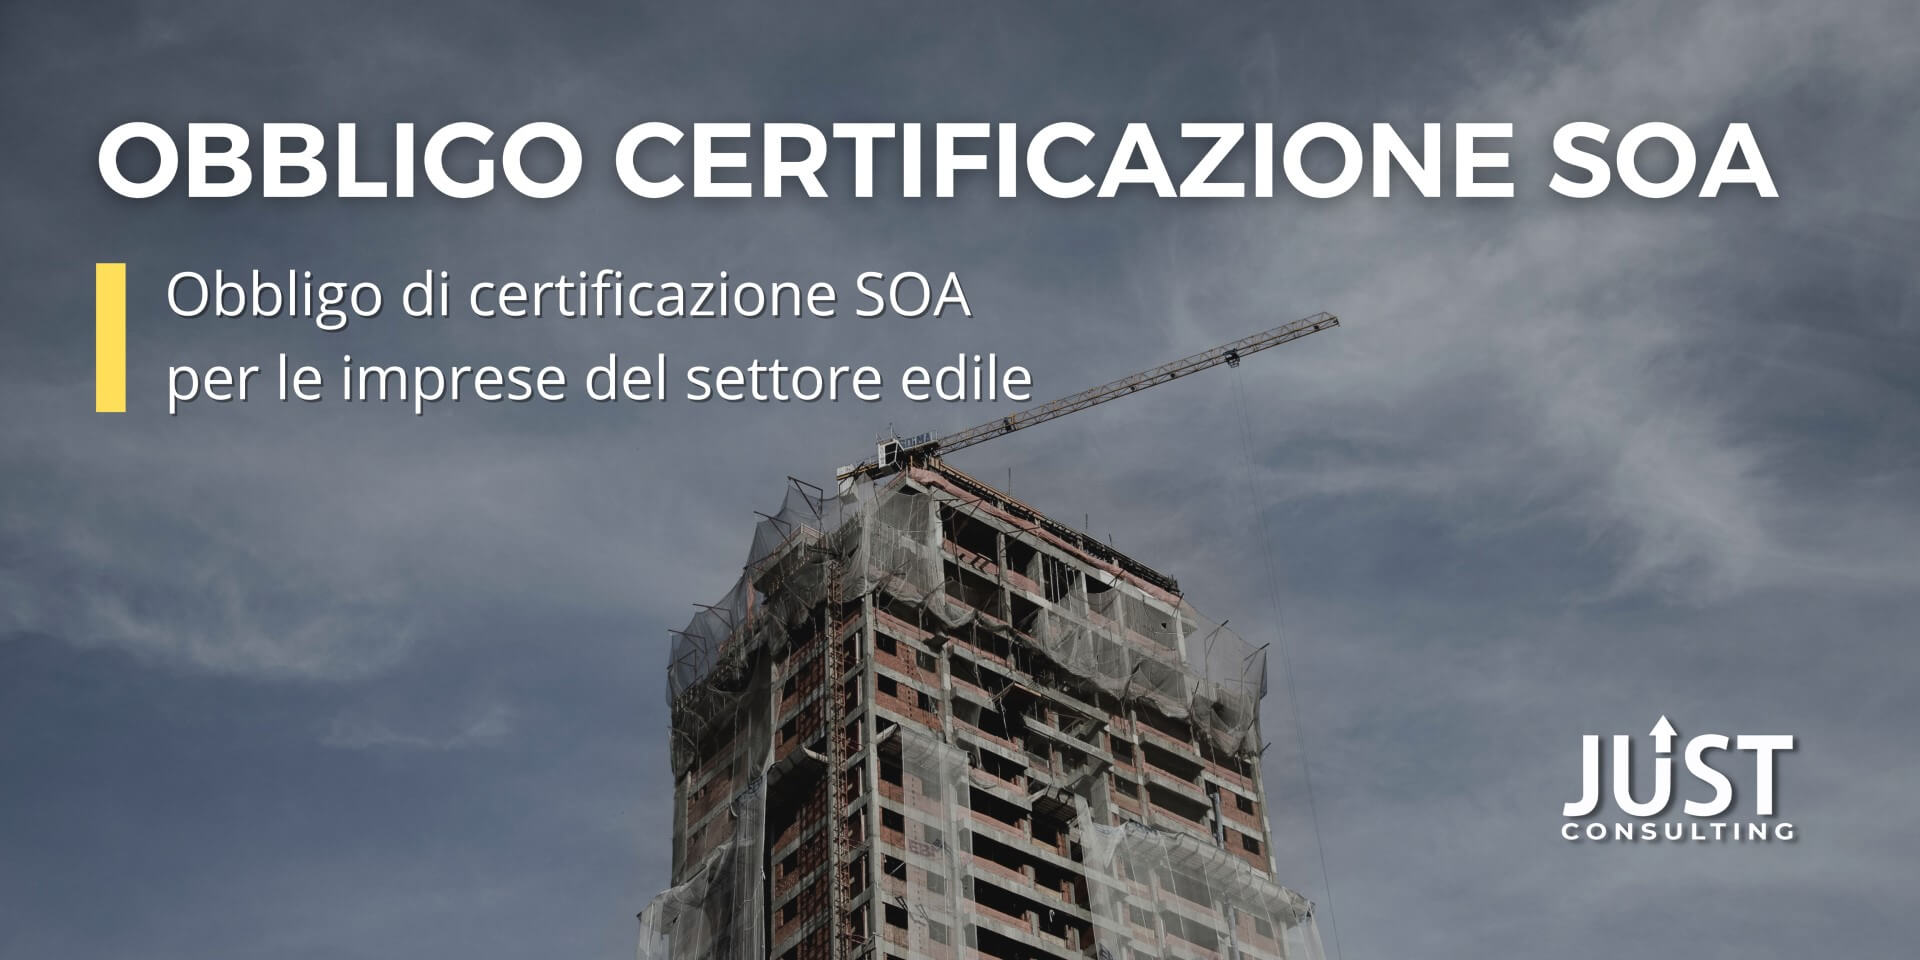 Certificazione SOA, certificazioni aziendali a Bologna, Modena, Ferrara, Emilia-Romagna